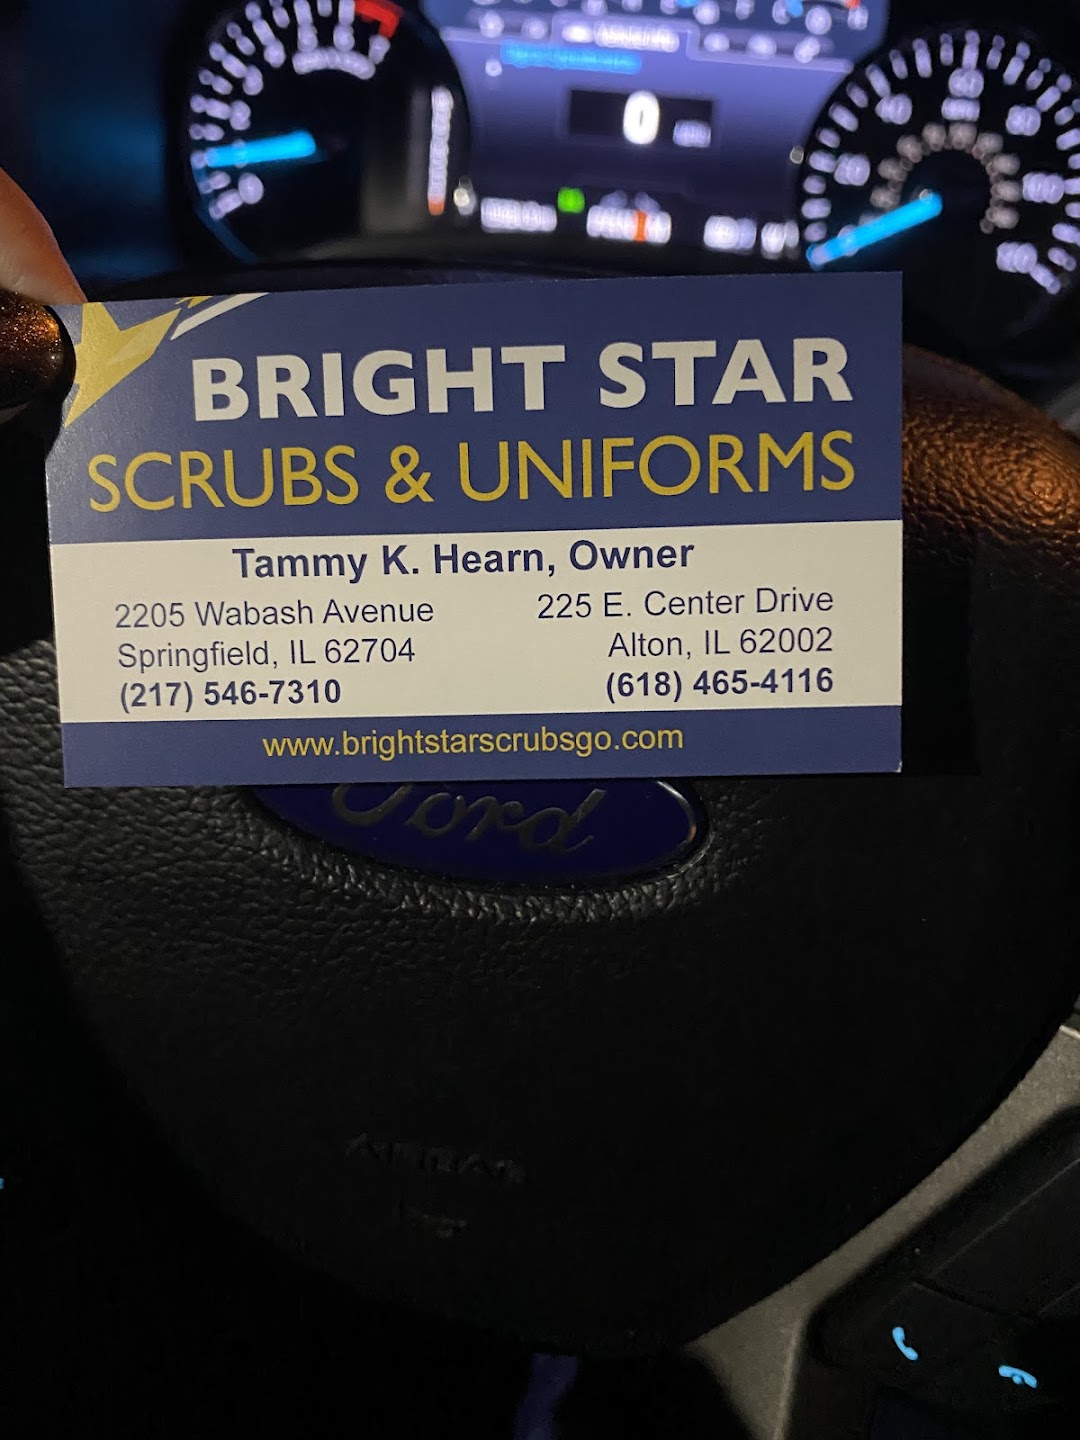 Bright Star Scrubs & Uniforms, Inc.